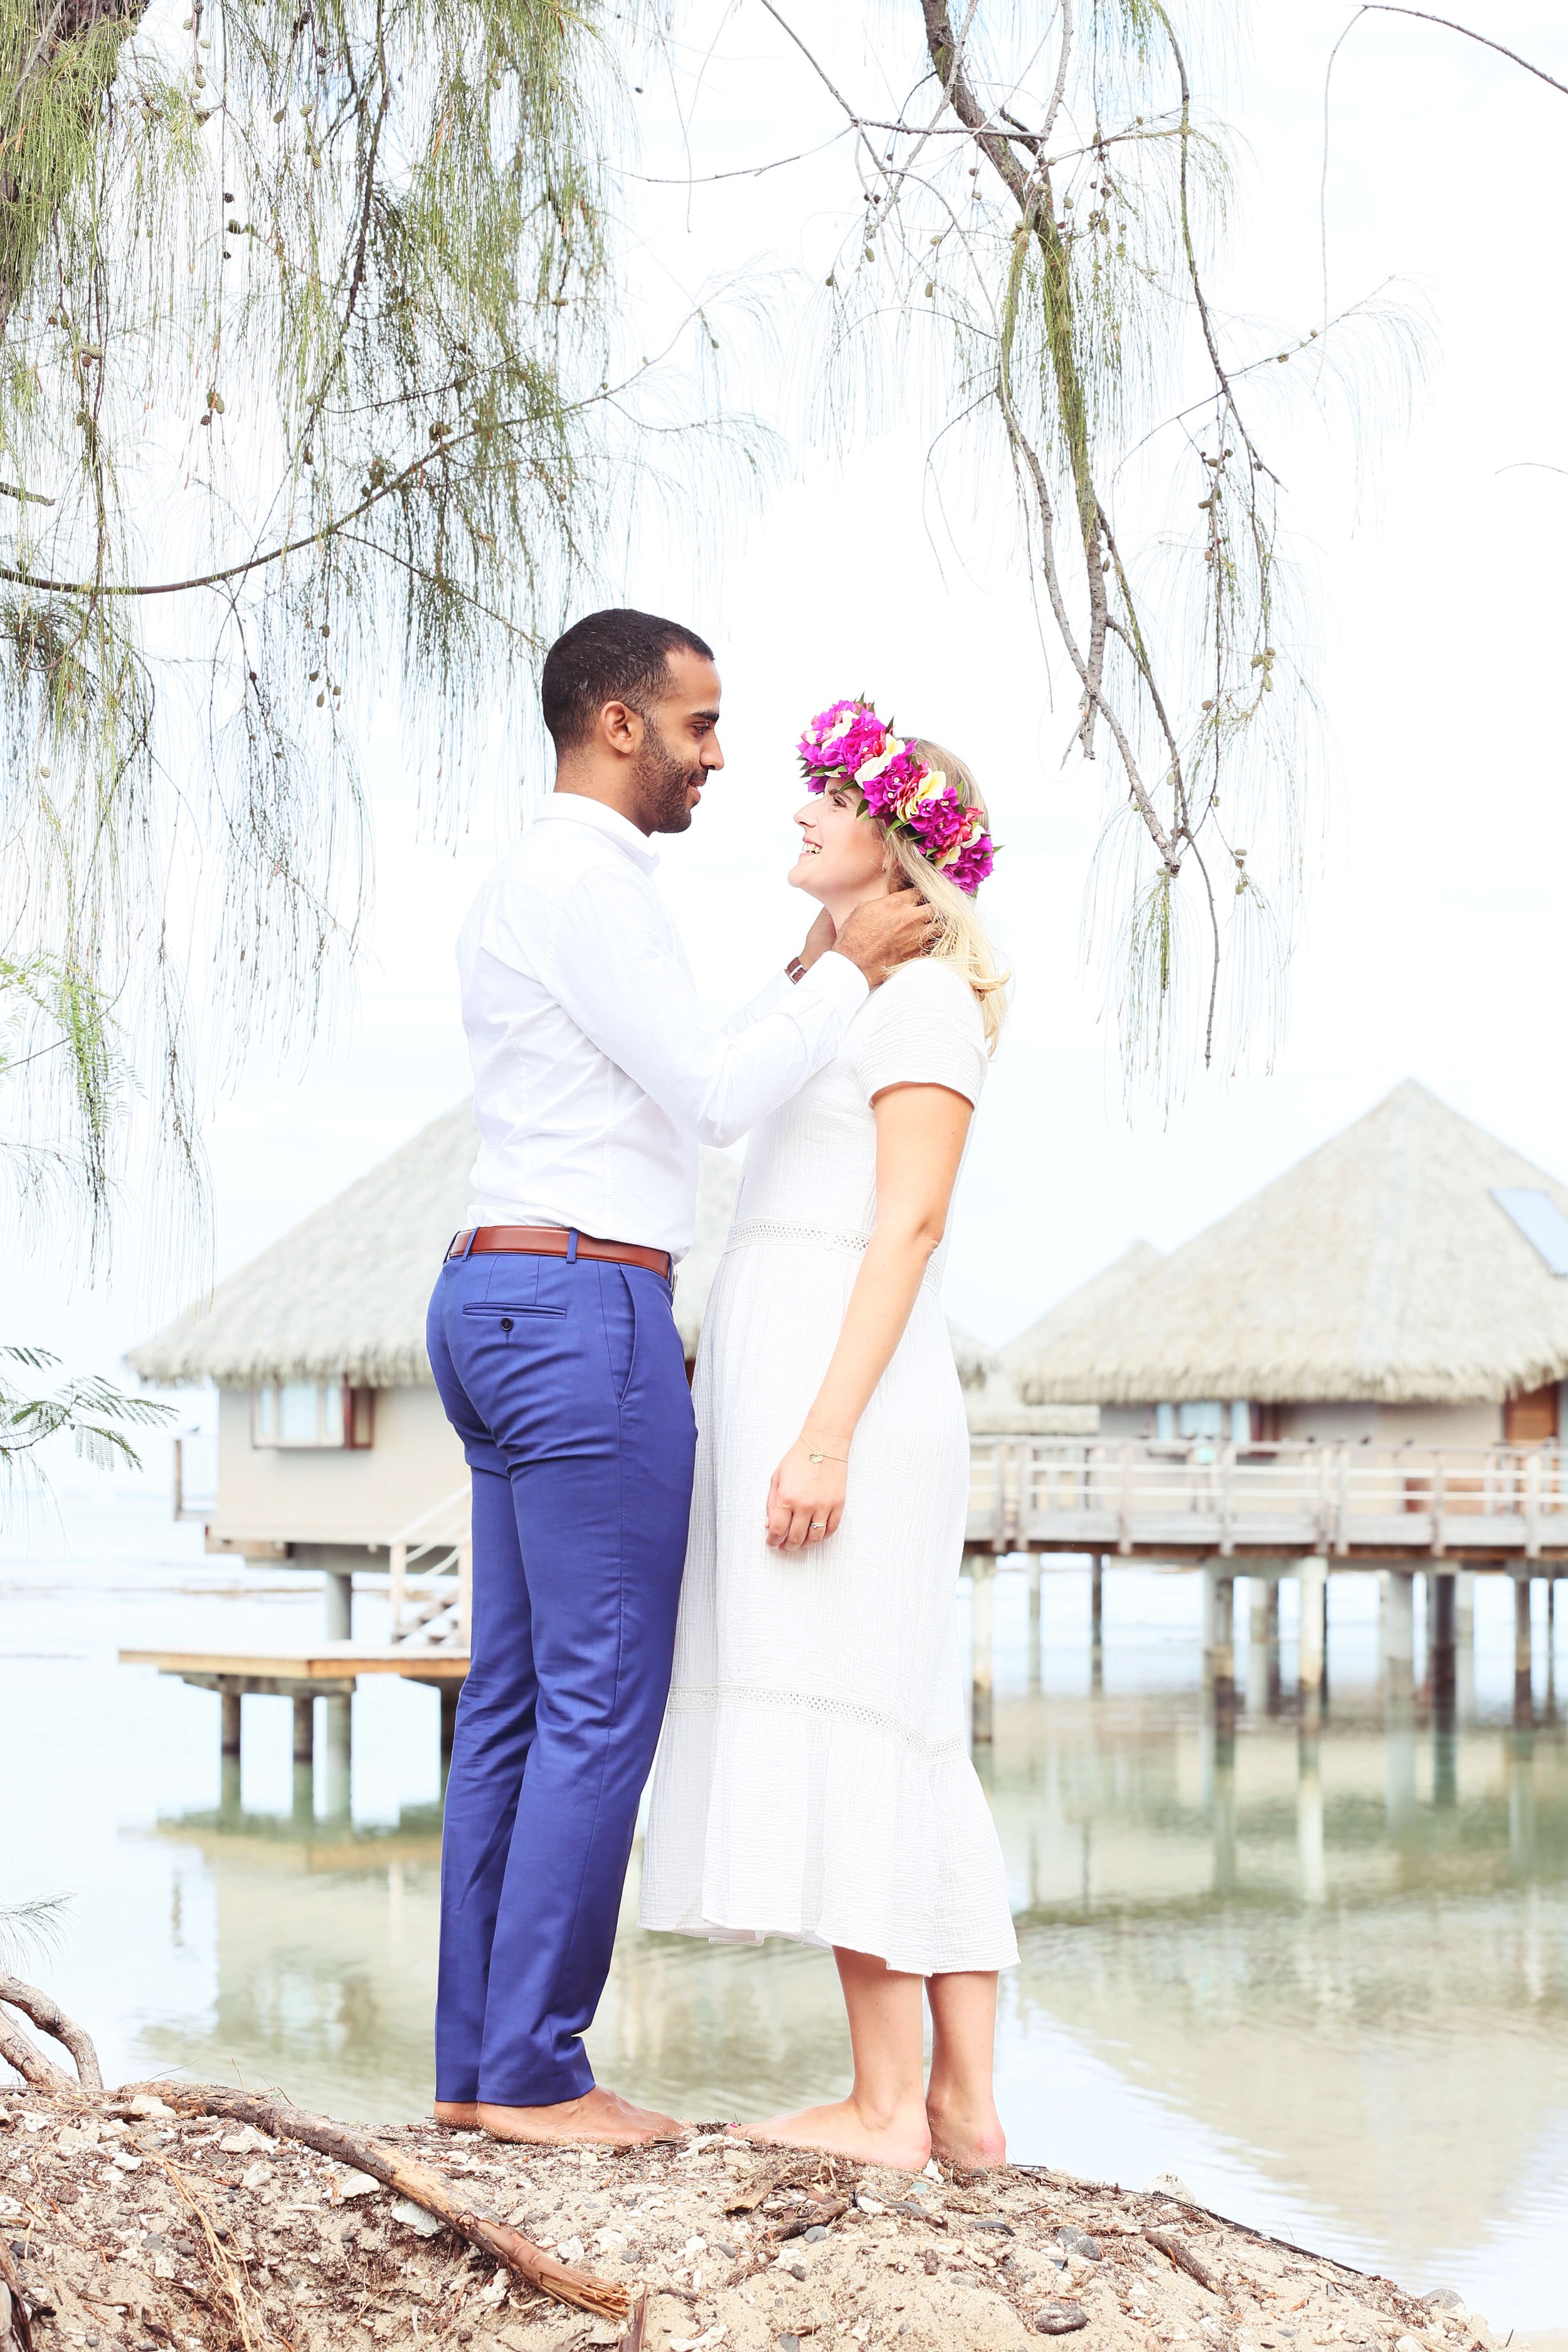 Photo mariage à Tahiti et Moorea